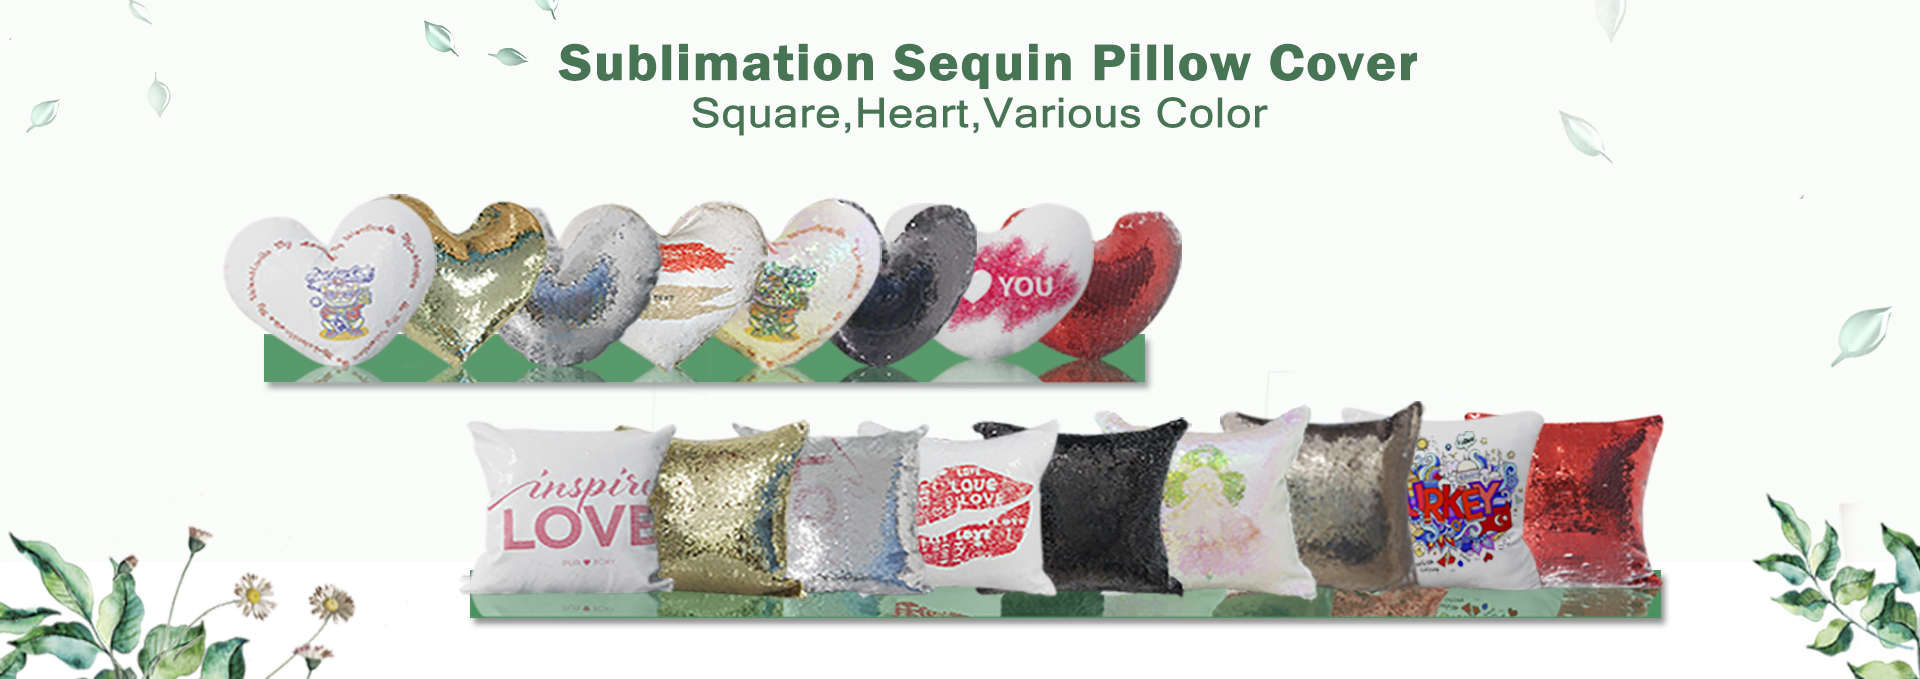 Sublimation Sequin Pillow Cover